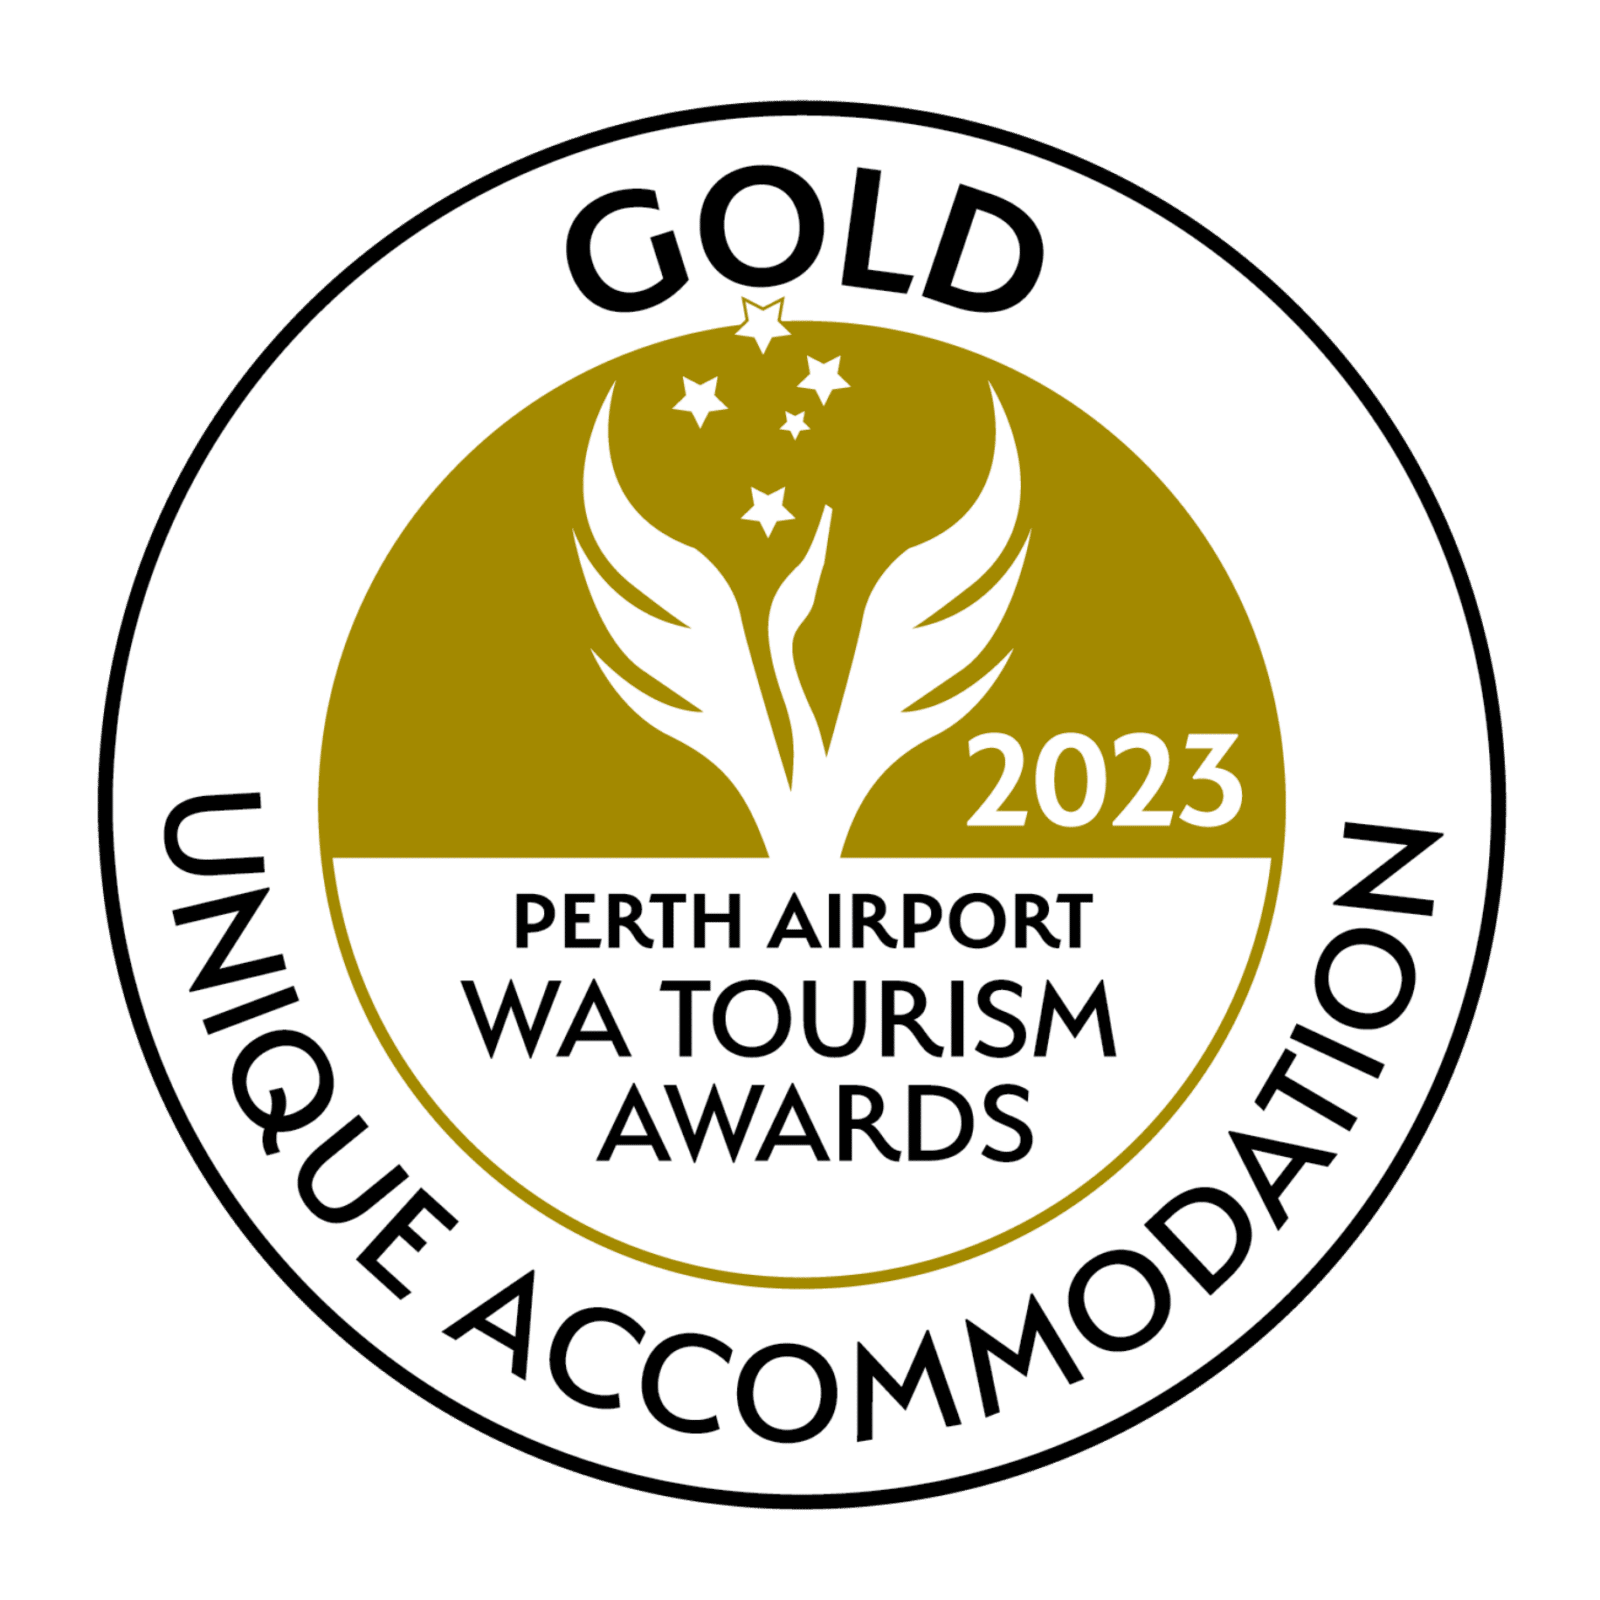 Unique Accommodation Award